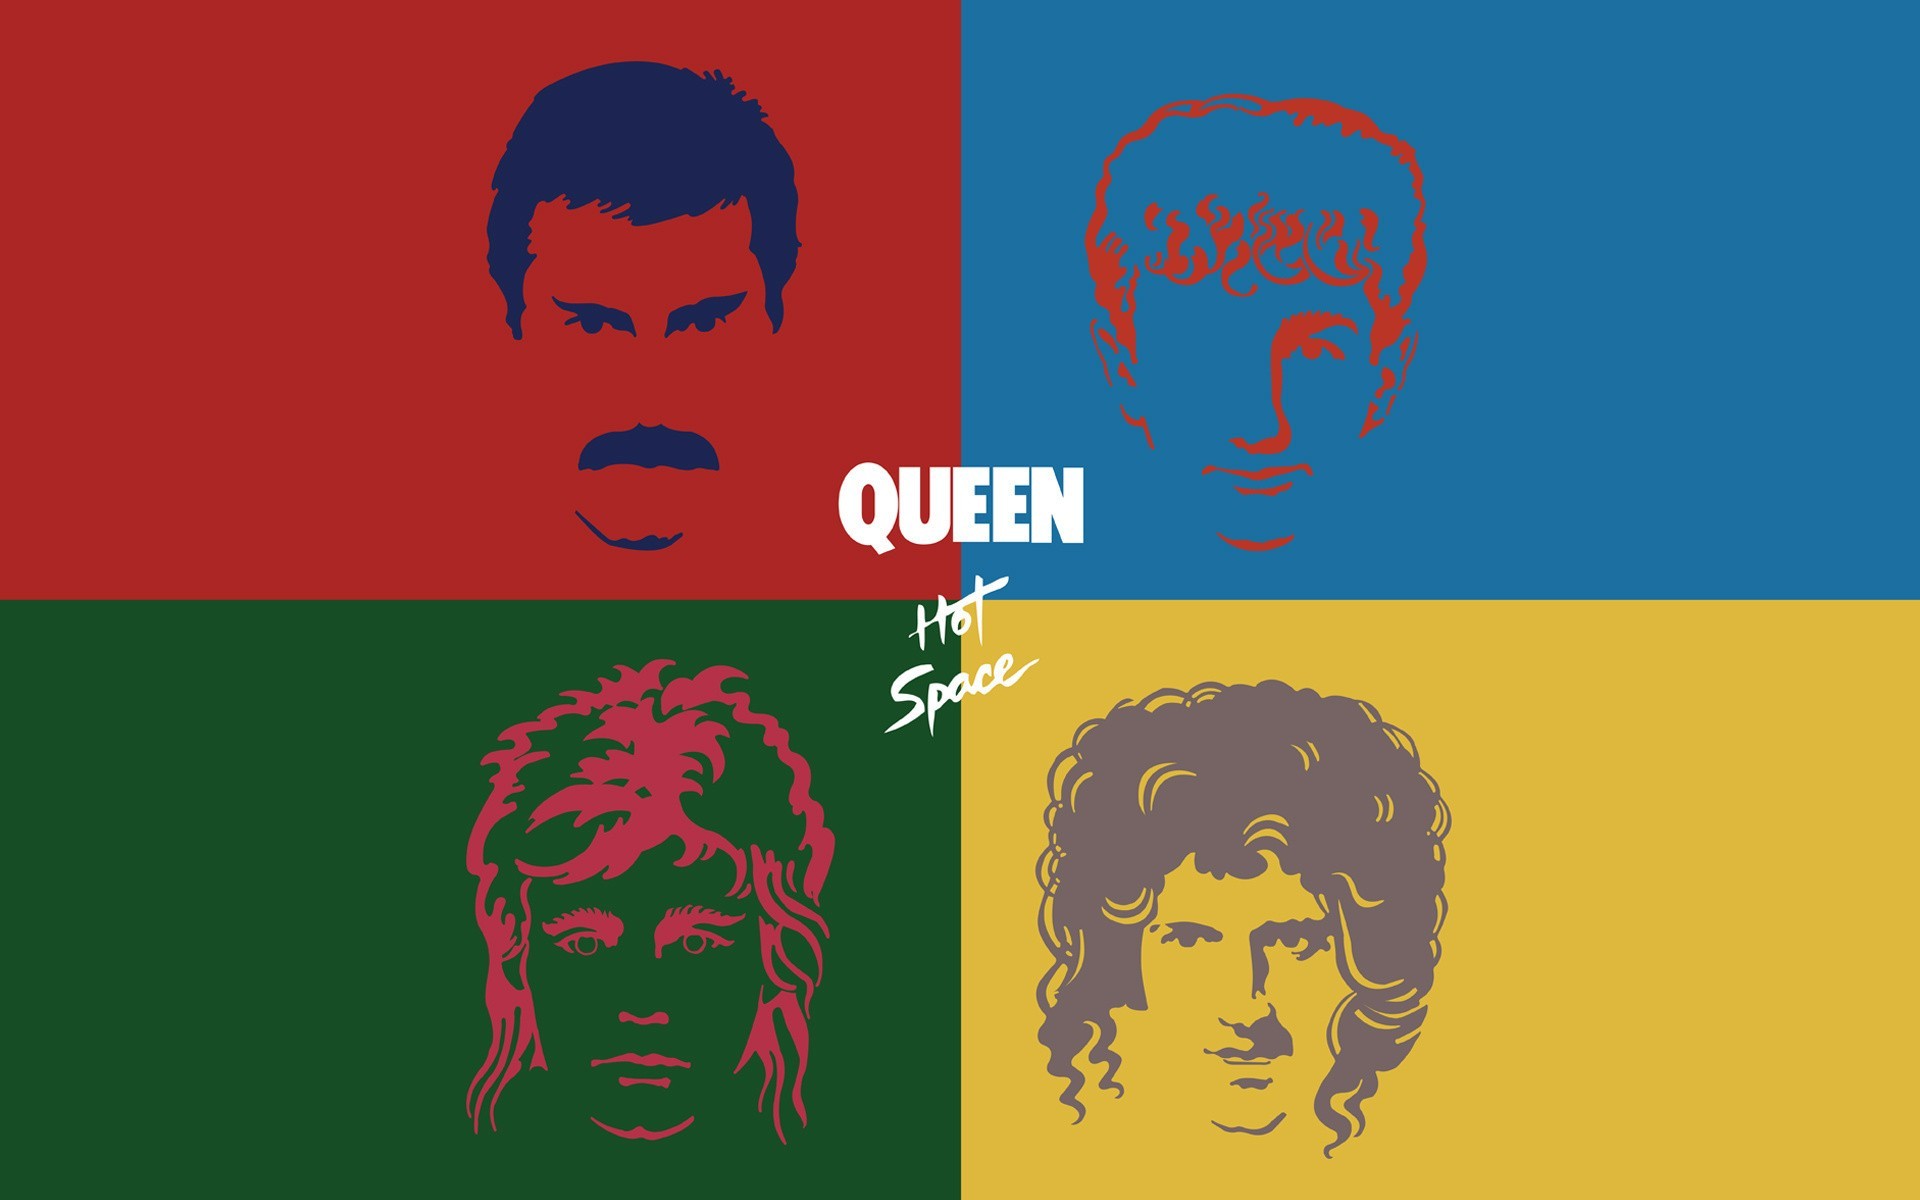 General 1920x1200 Queen  Freddie Mercury collage music band album covers artwork simple background minimalism